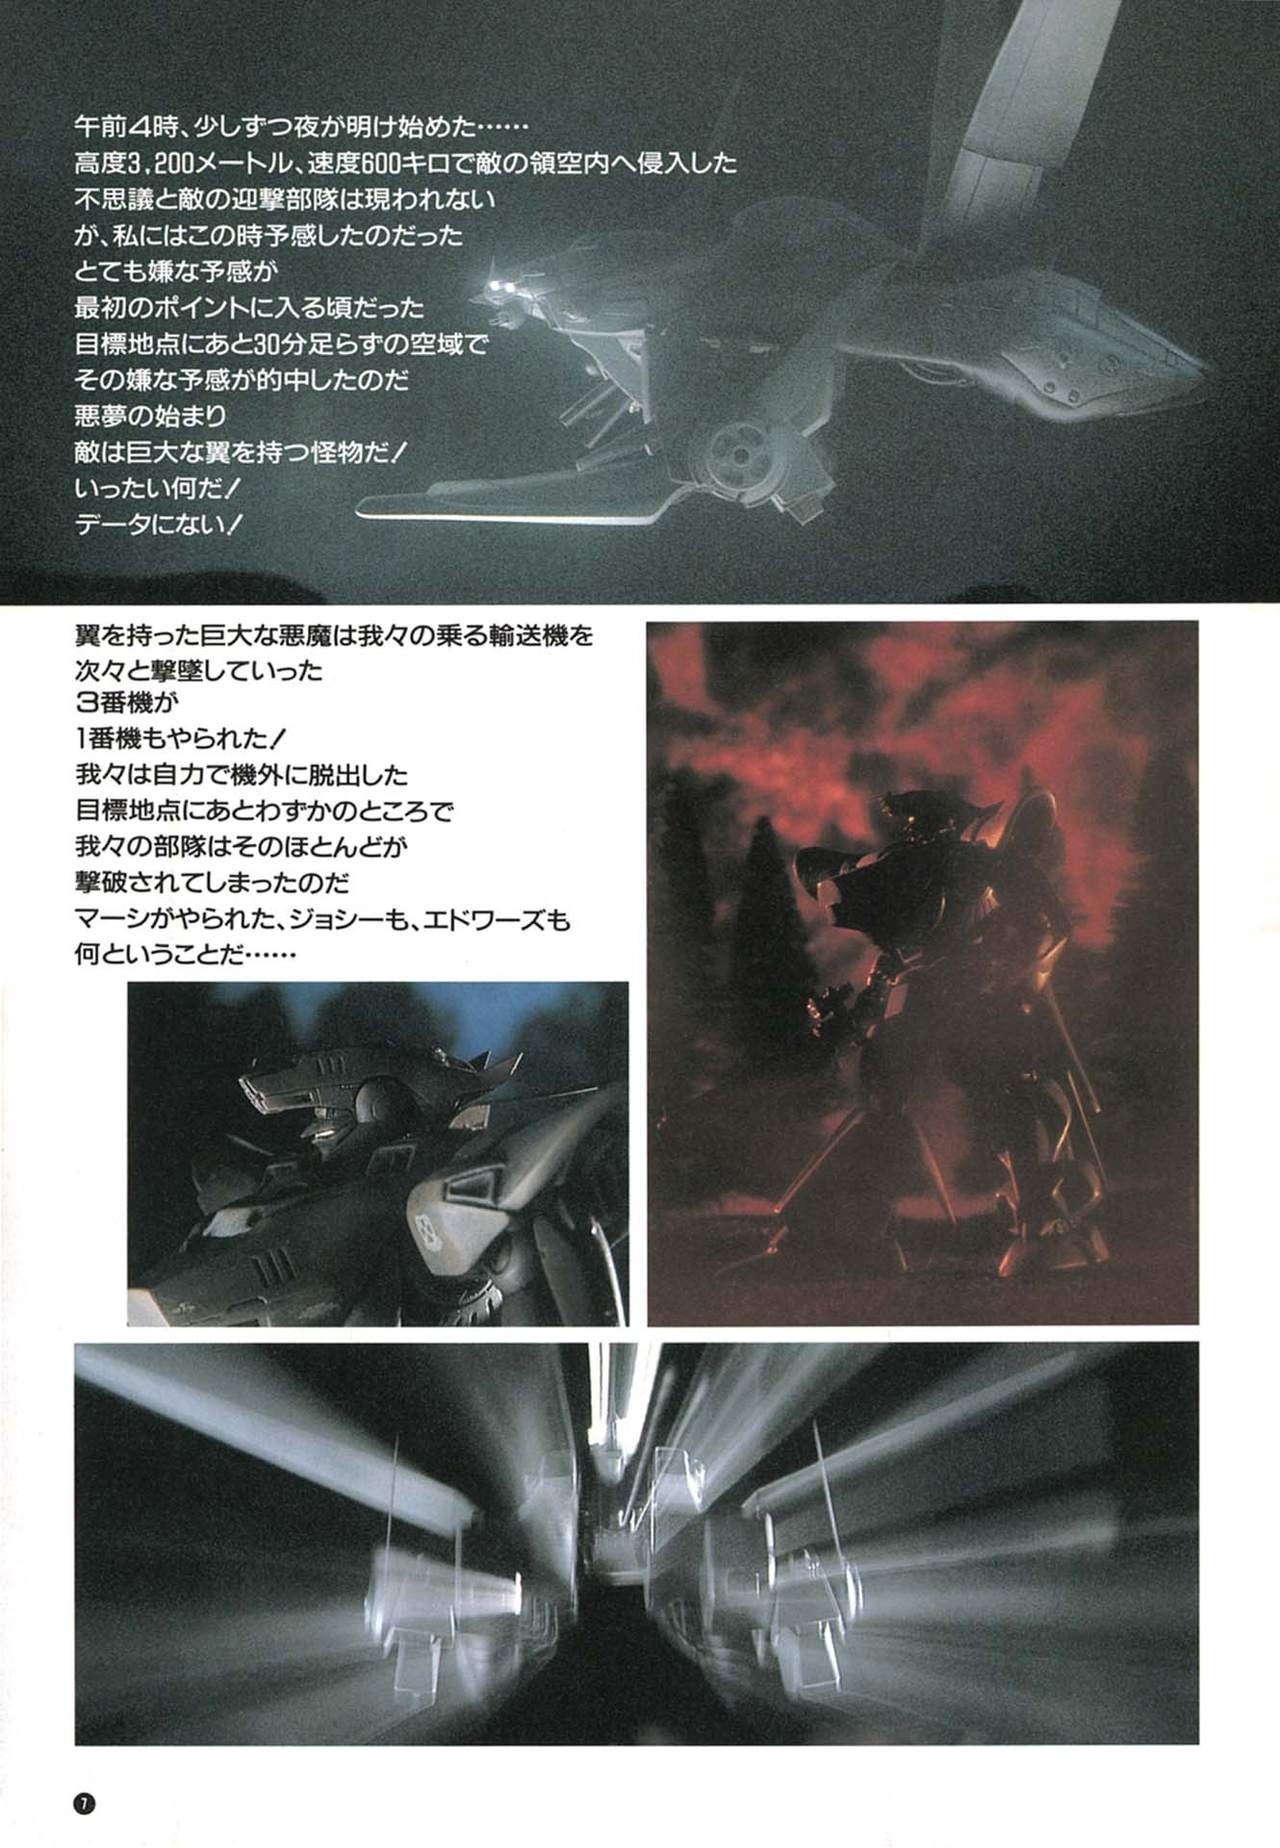 [Kazuhisa Kondo] Kazuhisa Kondo 2D & 3D Works - Go Ahead - From Mobile Suit Gundam to Original Mechanism 6